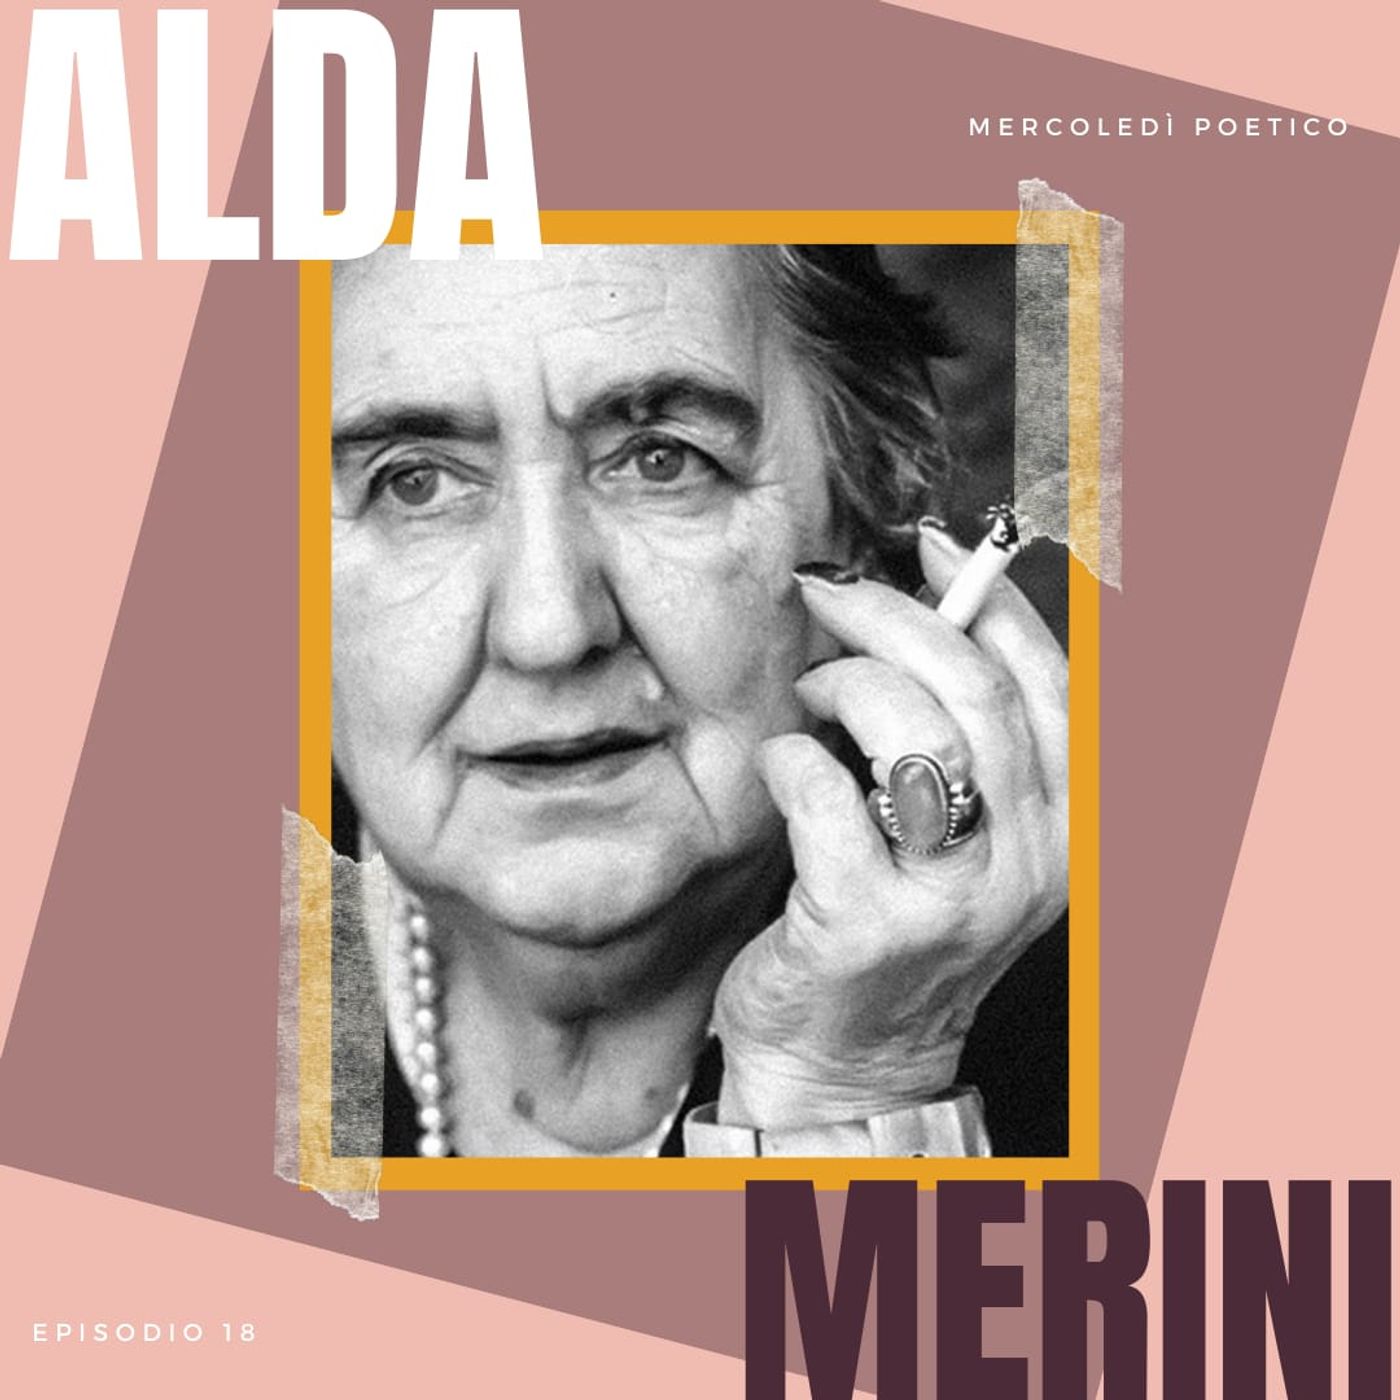 Mercoledì poetico - Ep. 18, Alda Merini